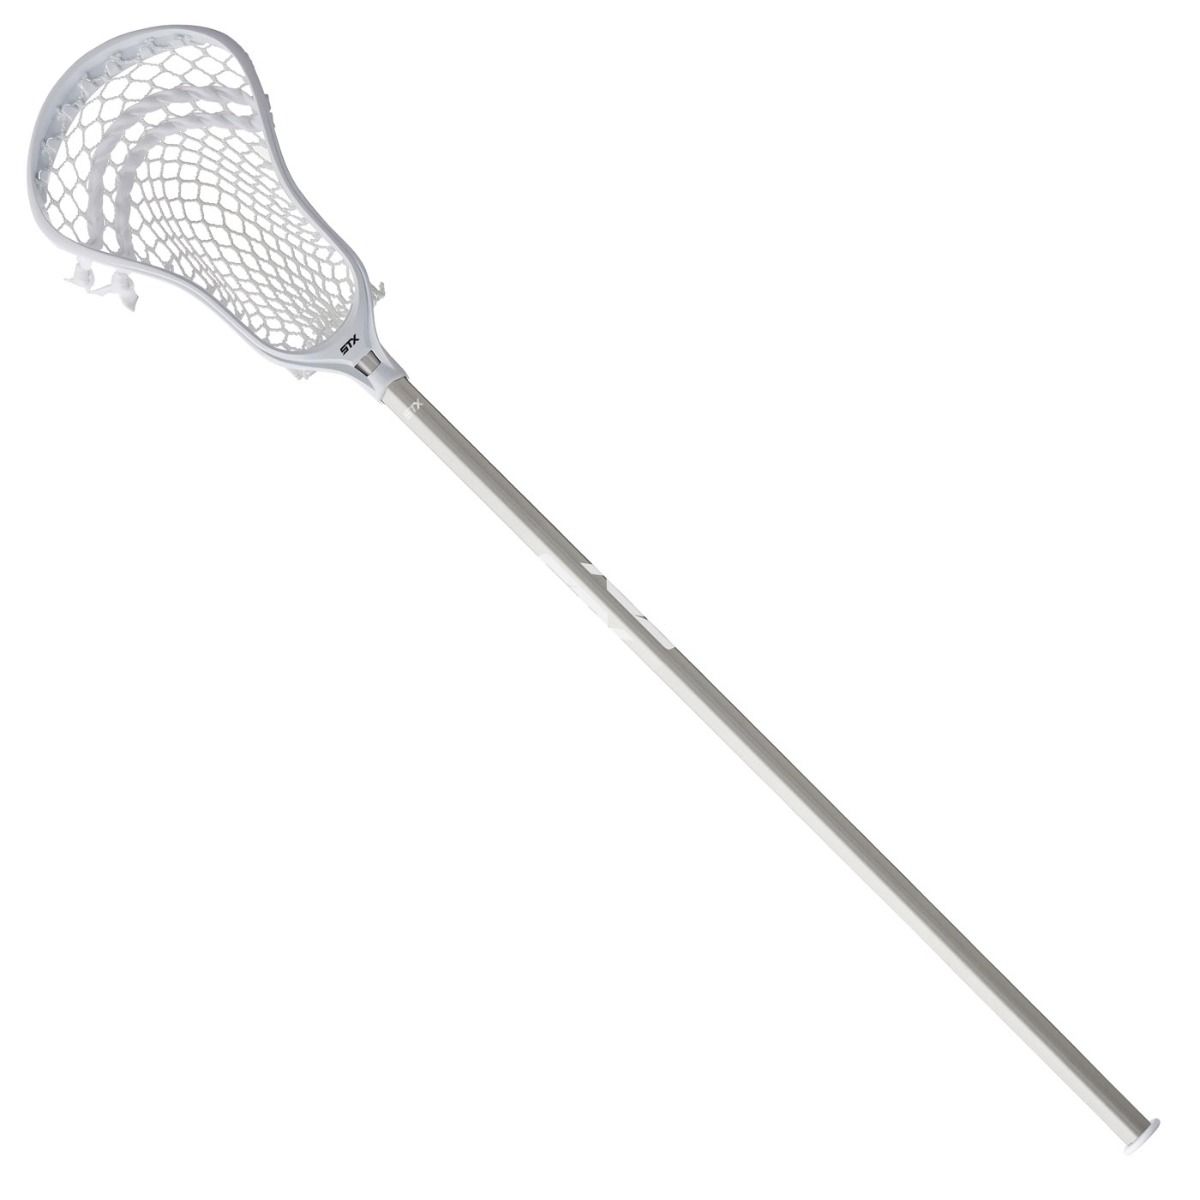 Lacrosse Stick SVG Silhouettes